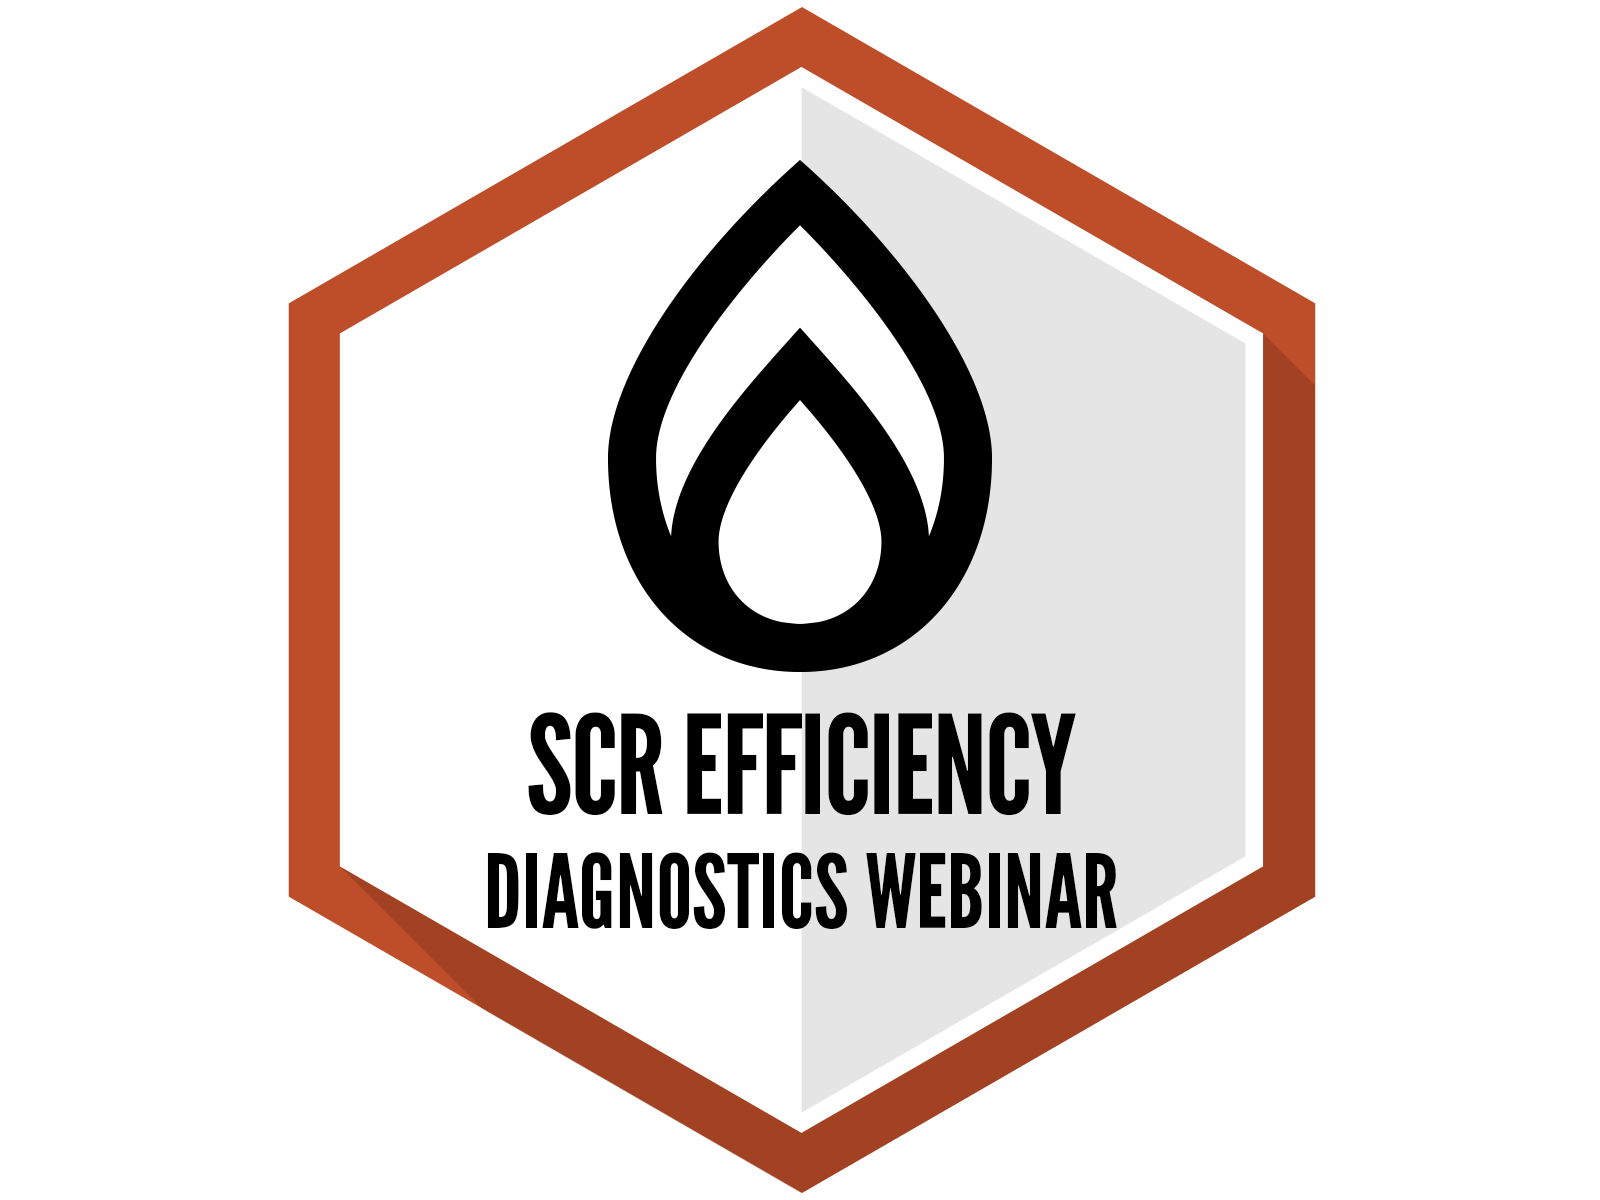 SCR Efficiency and Diagnostics Webinar